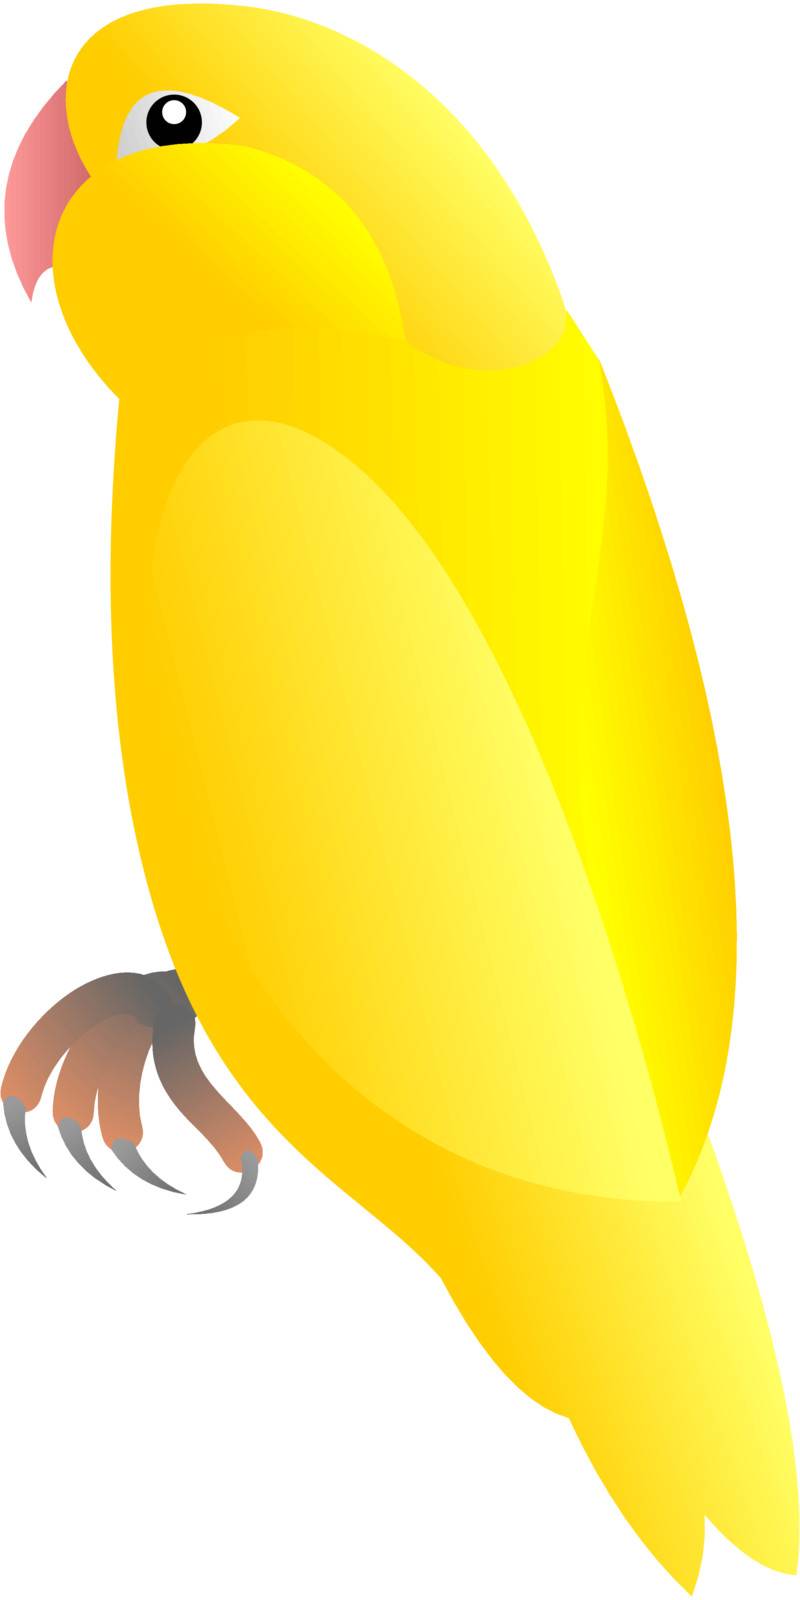 illustration of a yellow bird